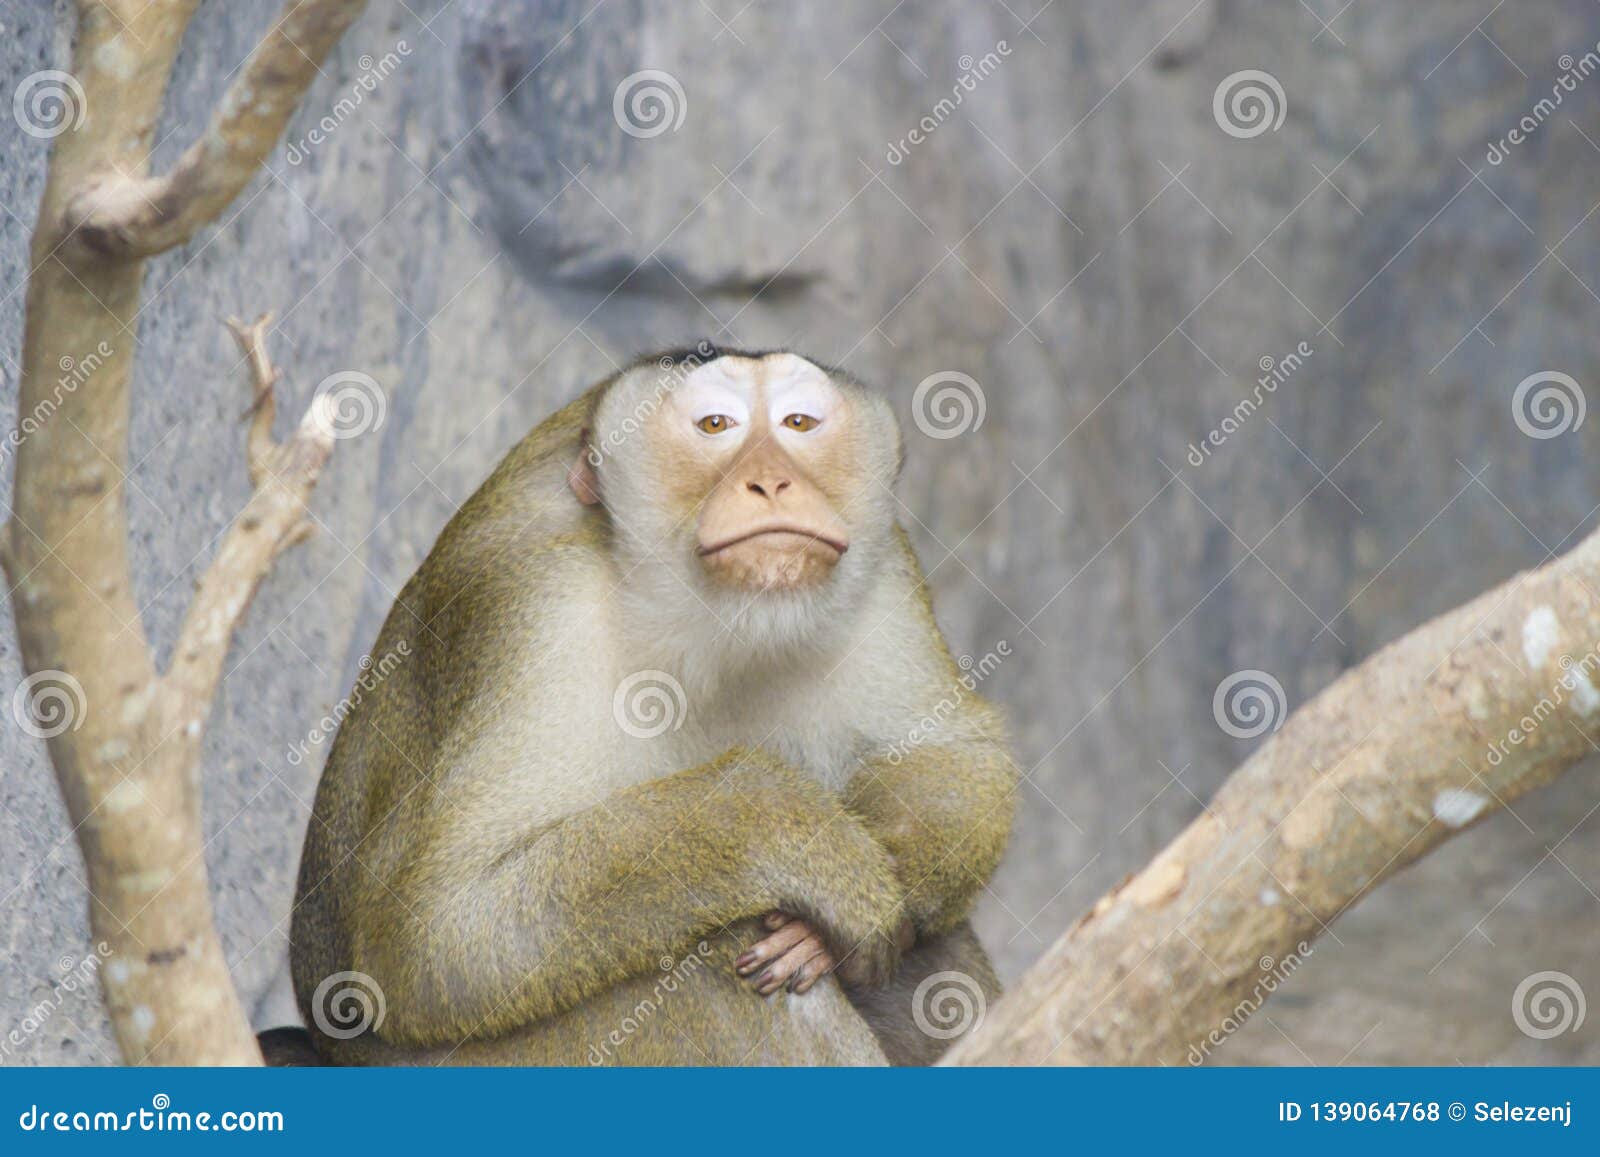 Very funny monkey stock photo. Image of natural, monkeys - 139064768